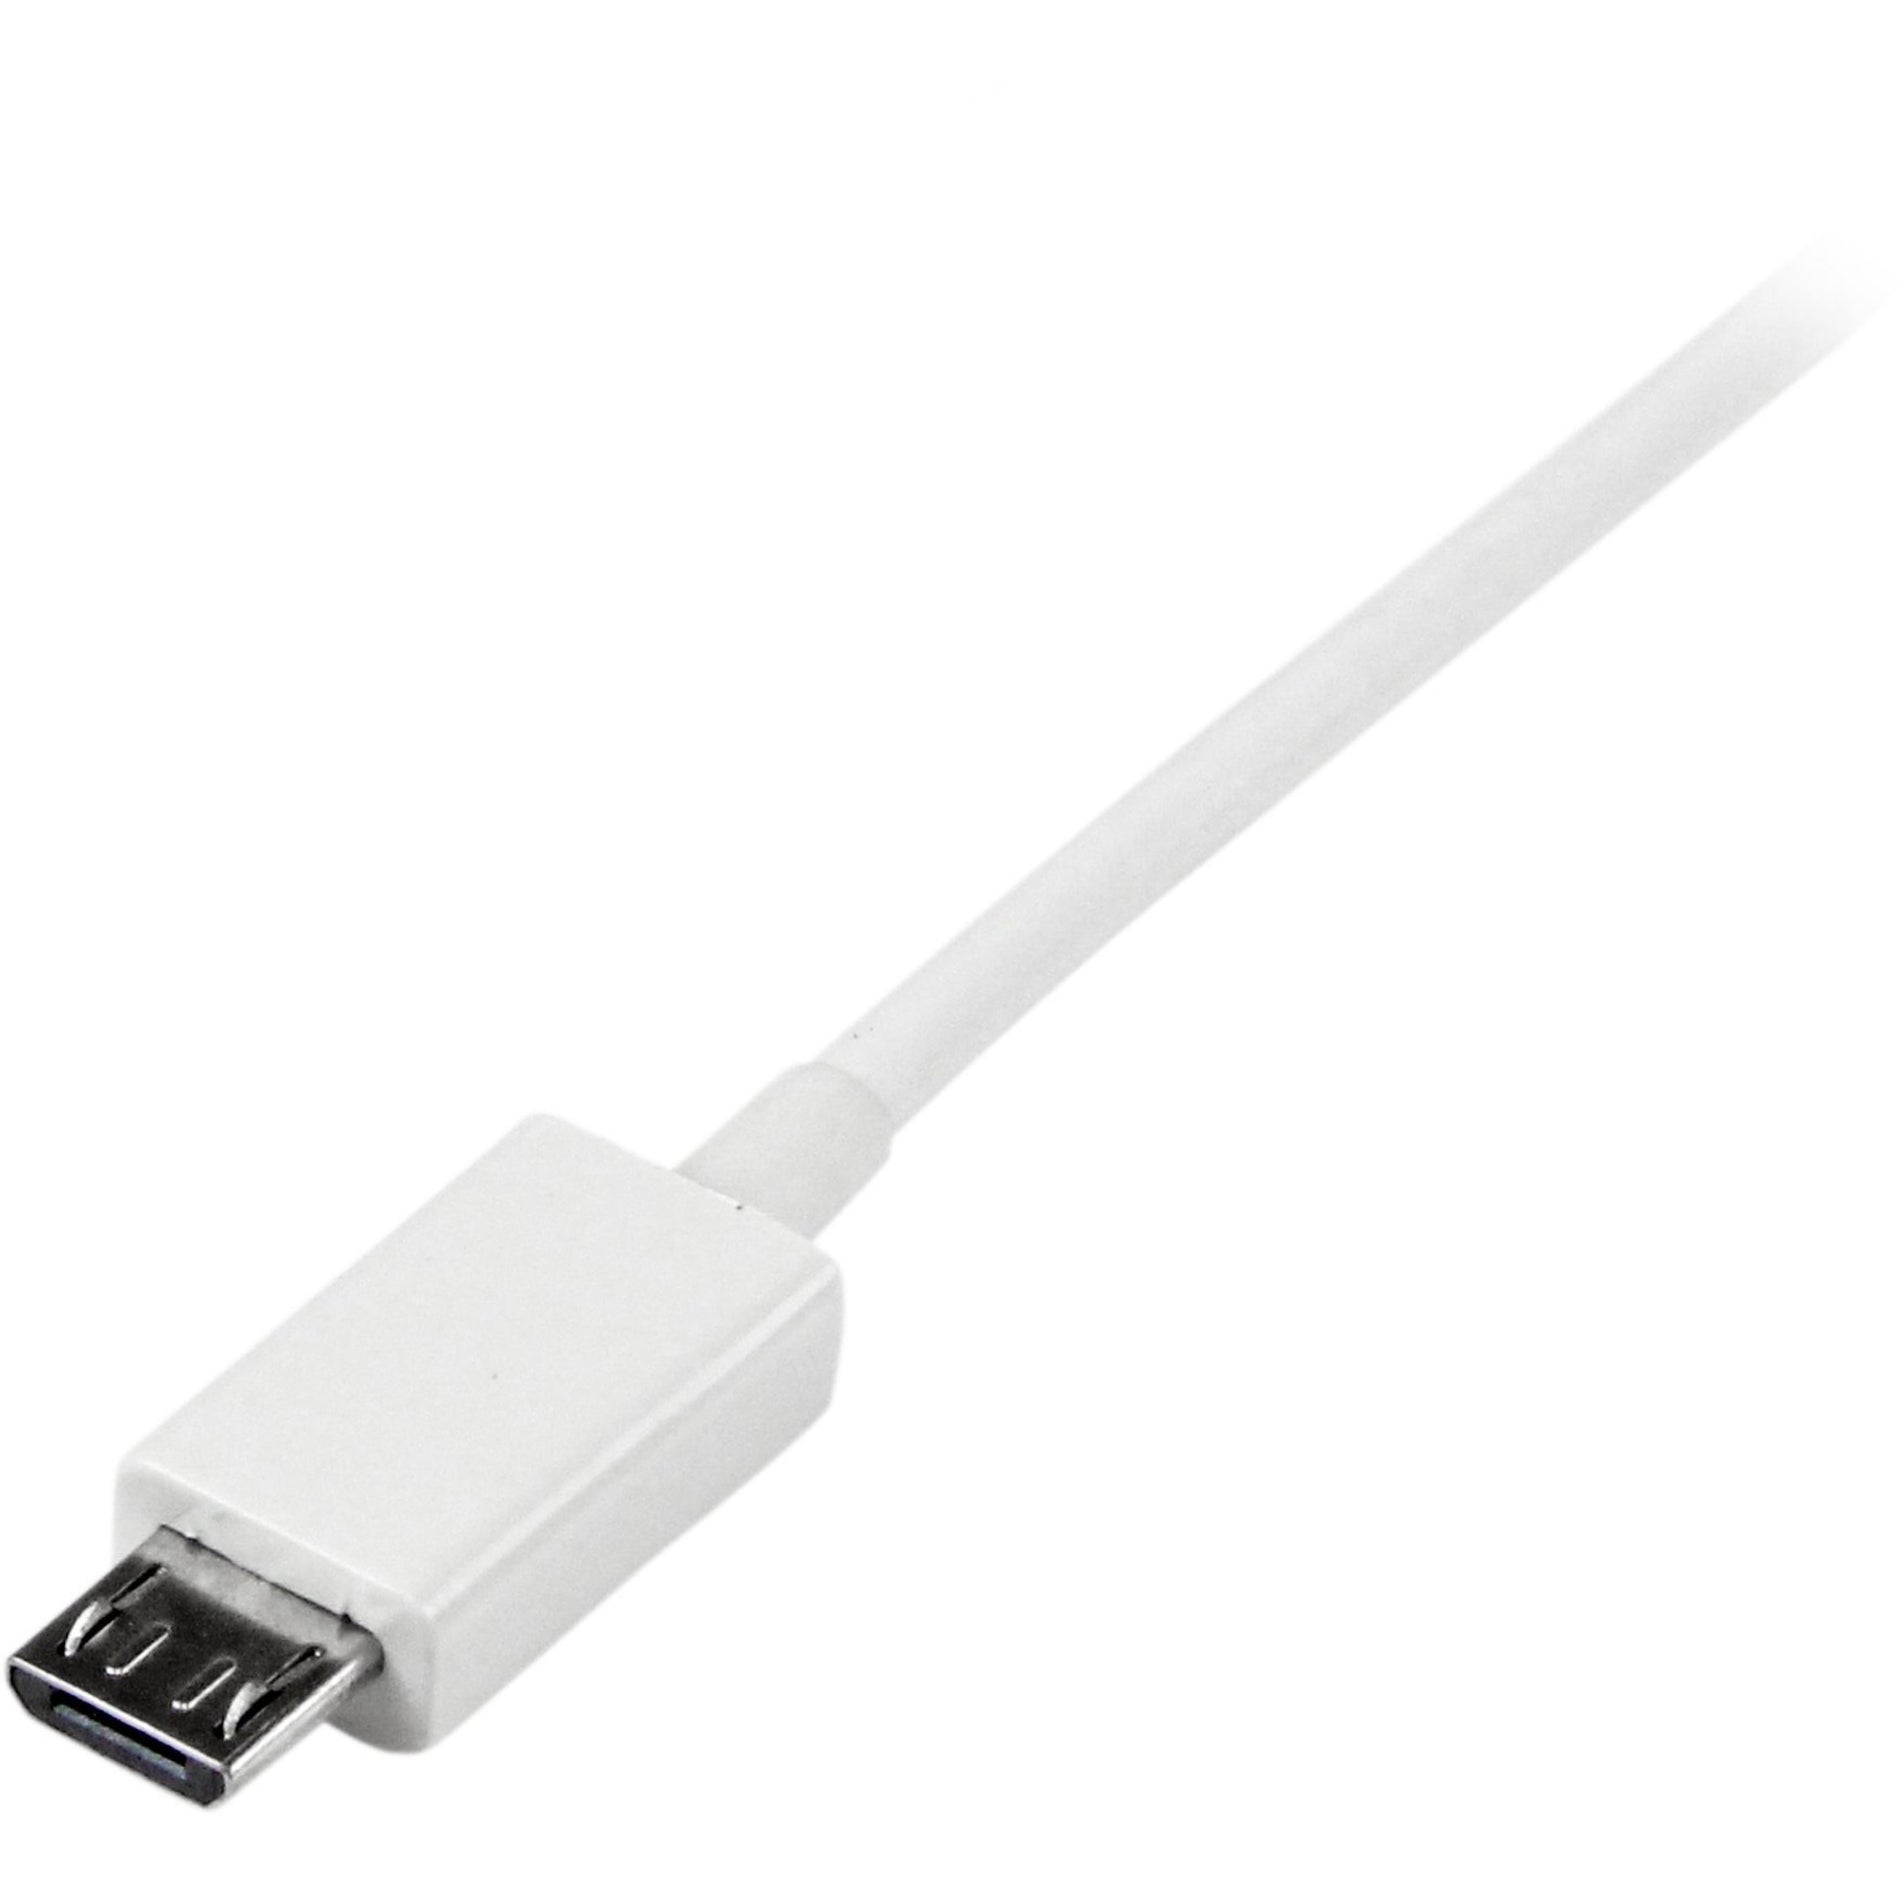 StarTech.com Cable USBPAUB50CMW Blanco de 0.5m Micro USB - A a Micro B Moldeado Alivio de Tensión Velocidad de Transferencia de Datos de 480 Mbit/s